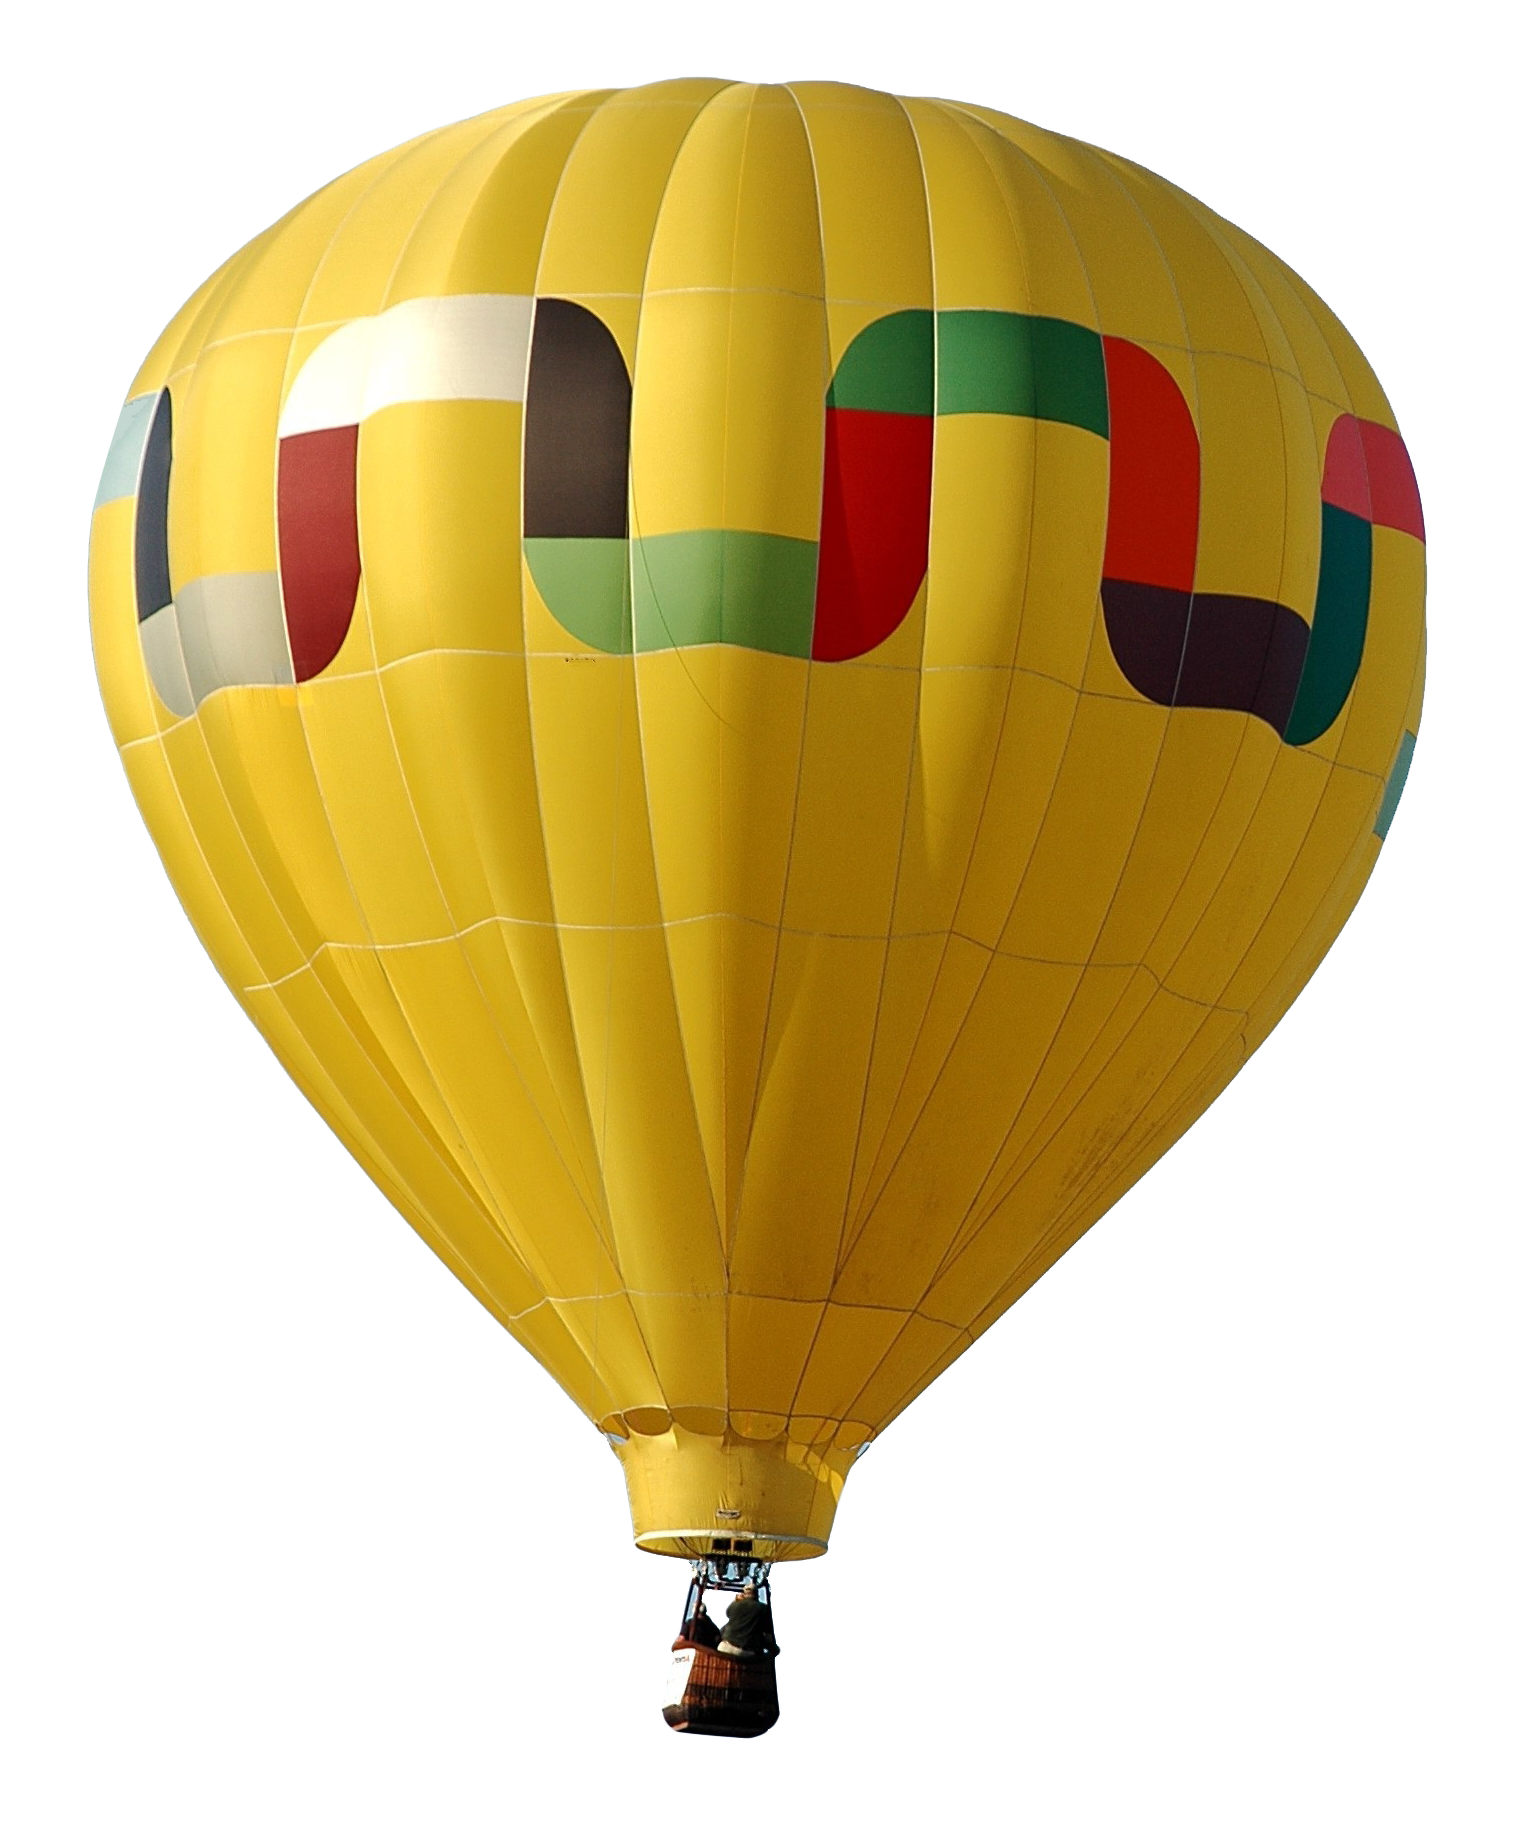 Clipart fire hot air balloon. Festival schedule of activities